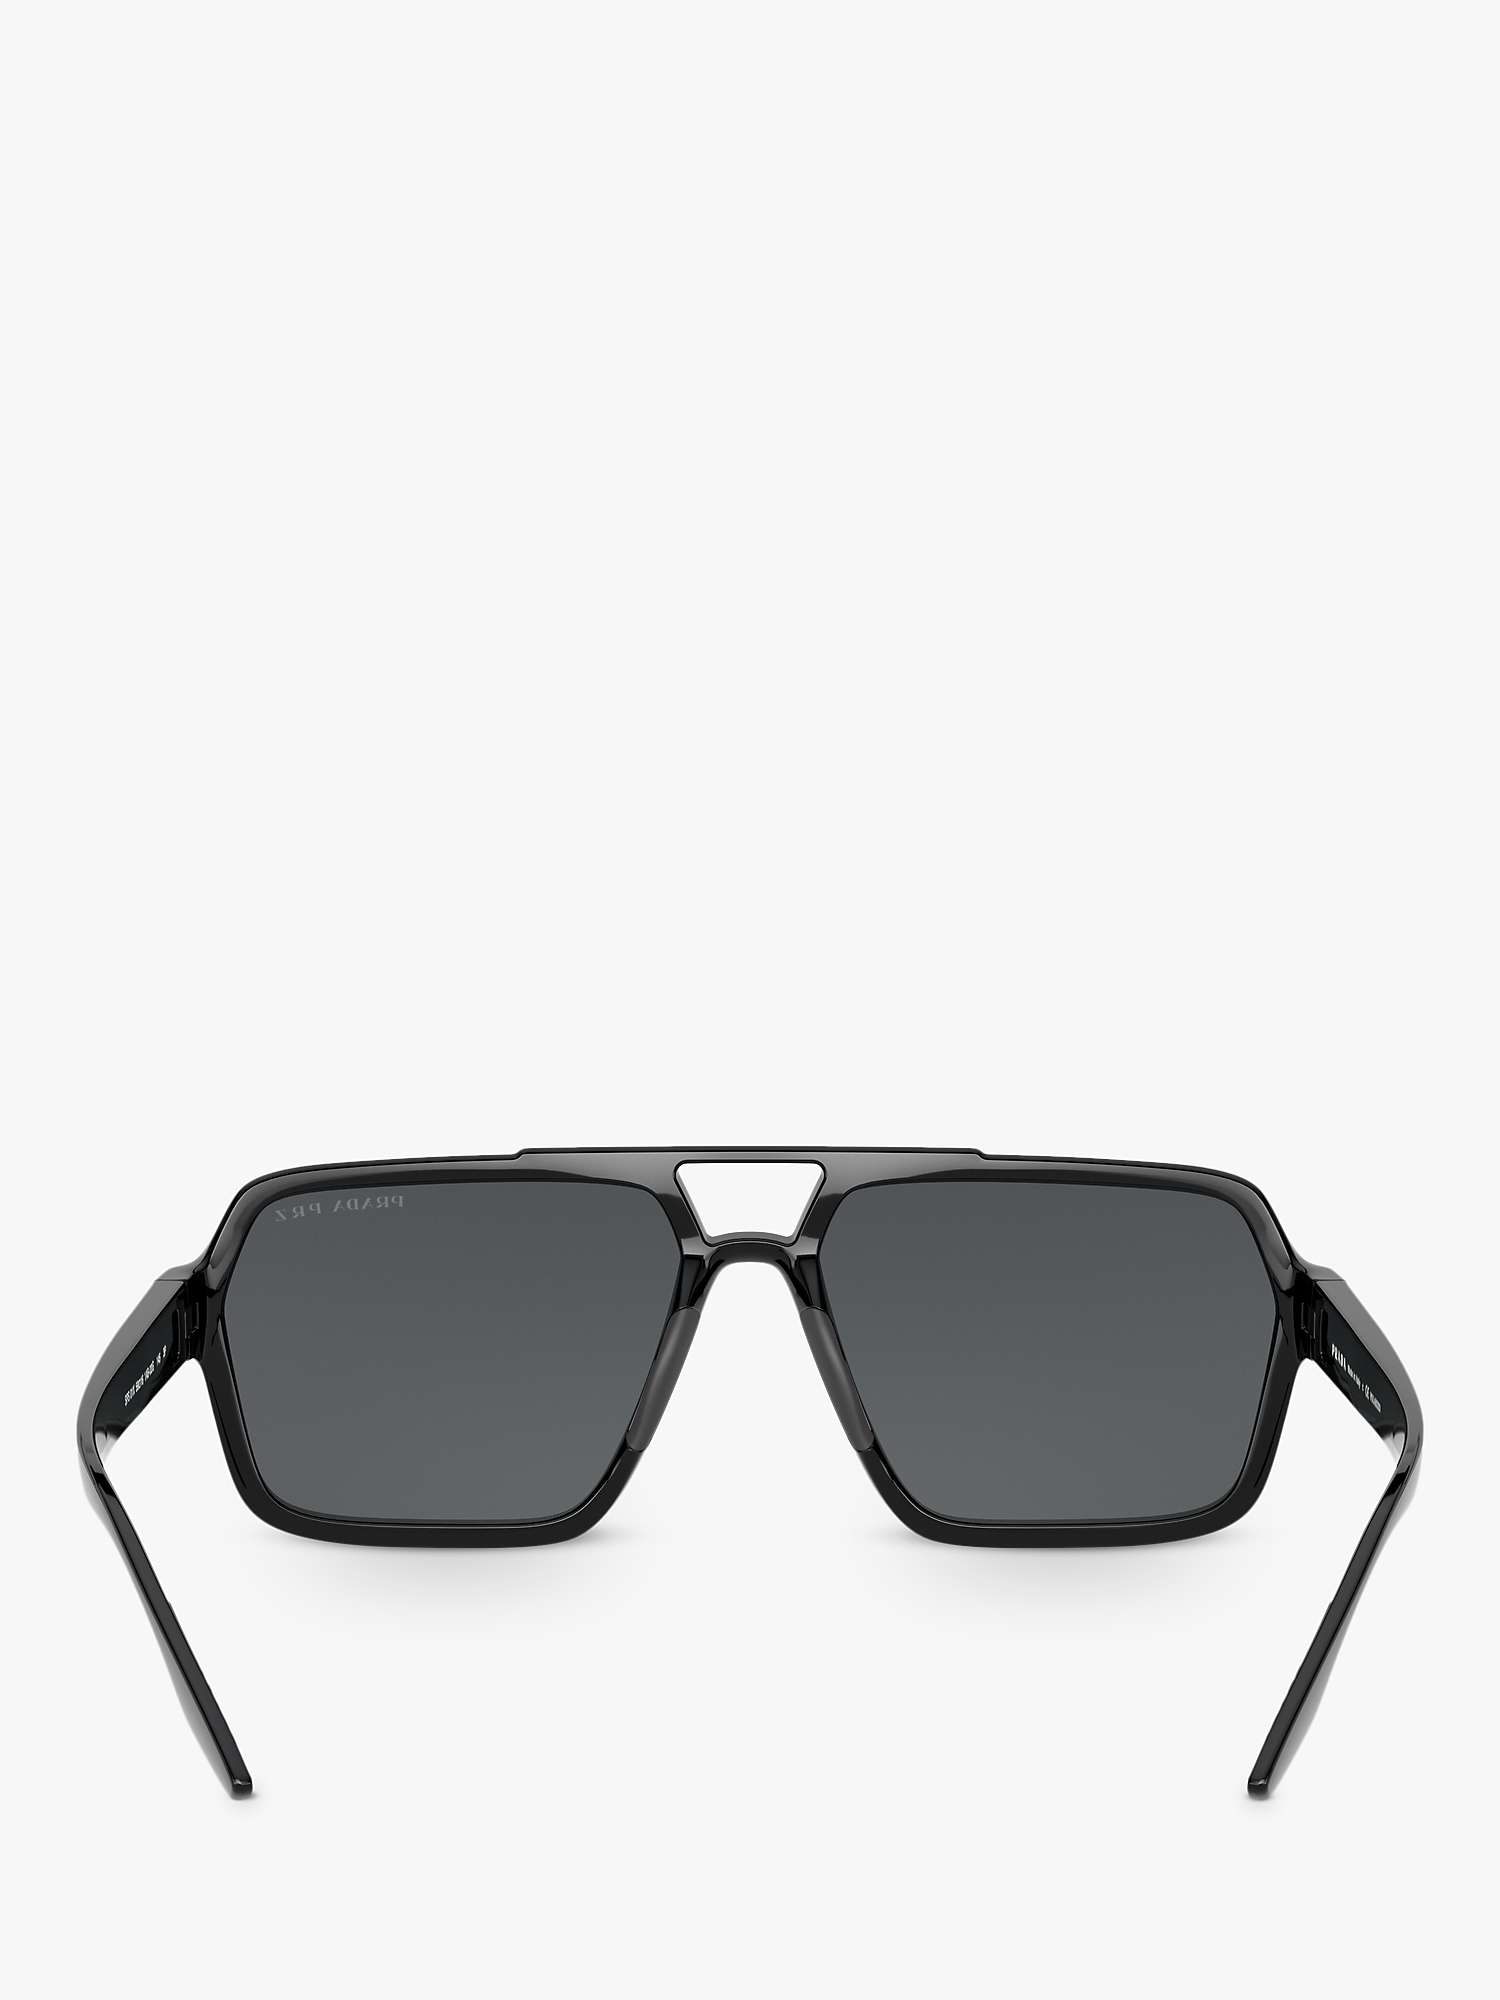 Buy Prada PS 01XS Men's Polarised Rectangular Sunglasses, Black/Grey Online at johnlewis.com